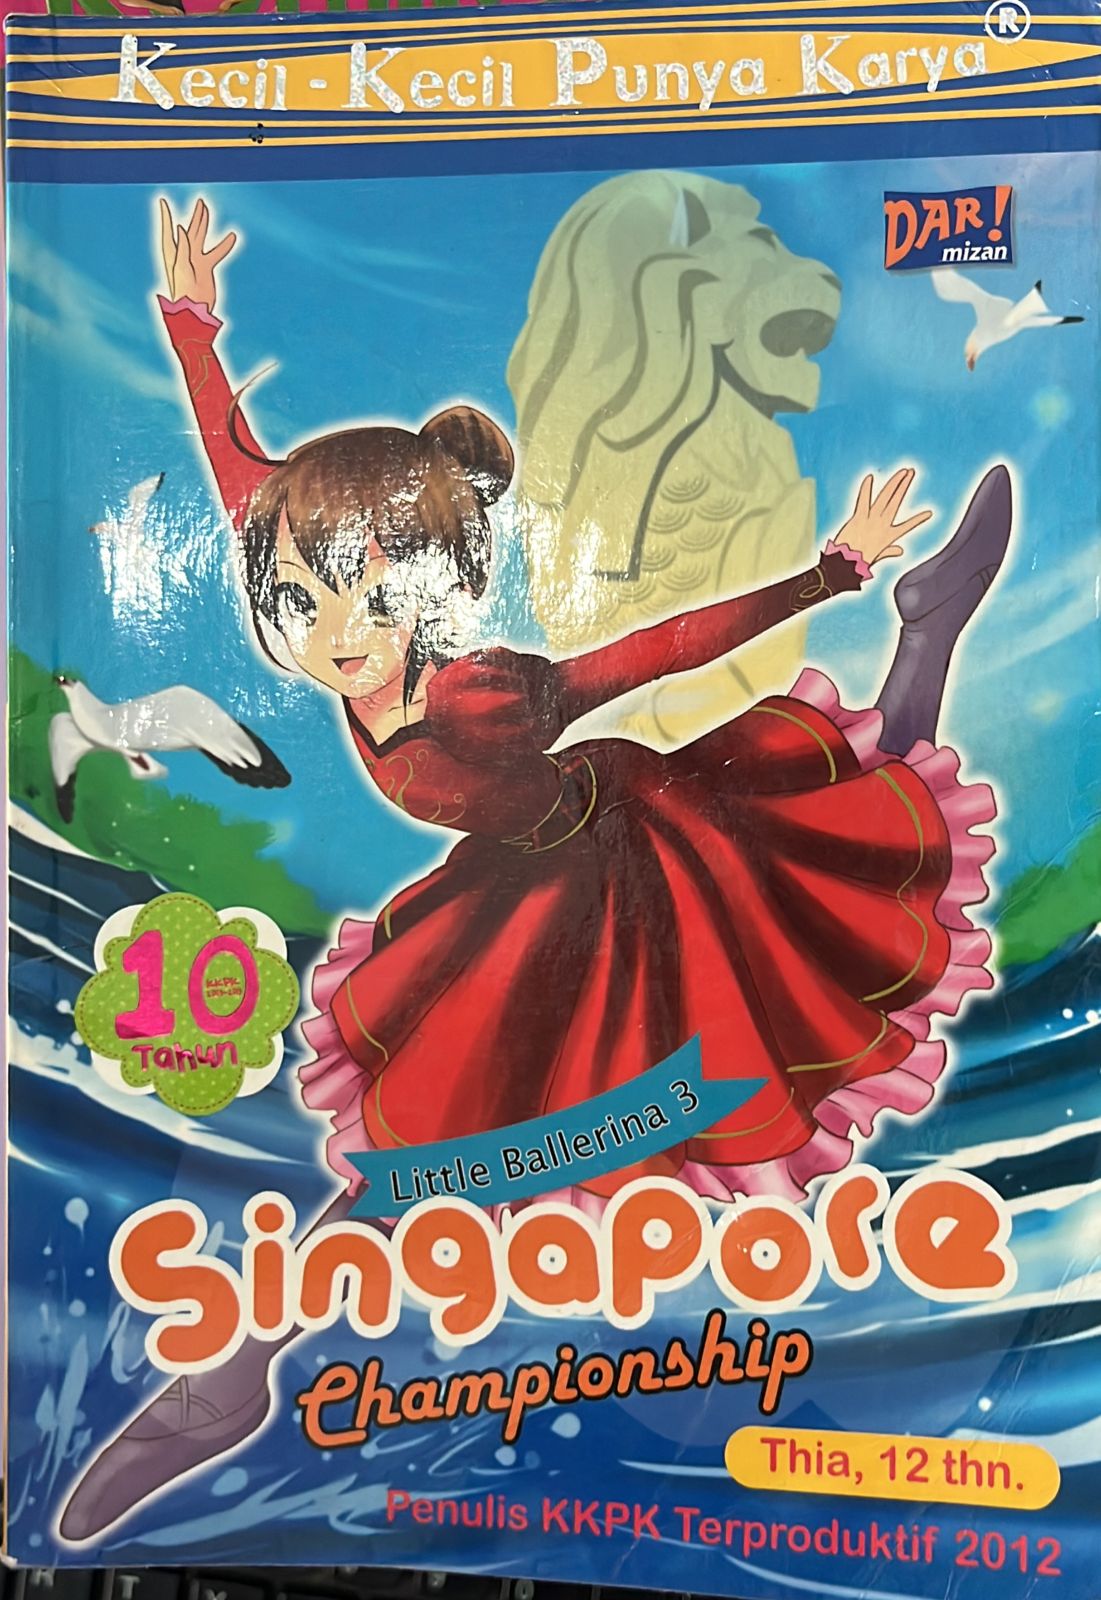 KKPK:Little Ballerina 3 Singapore Championship